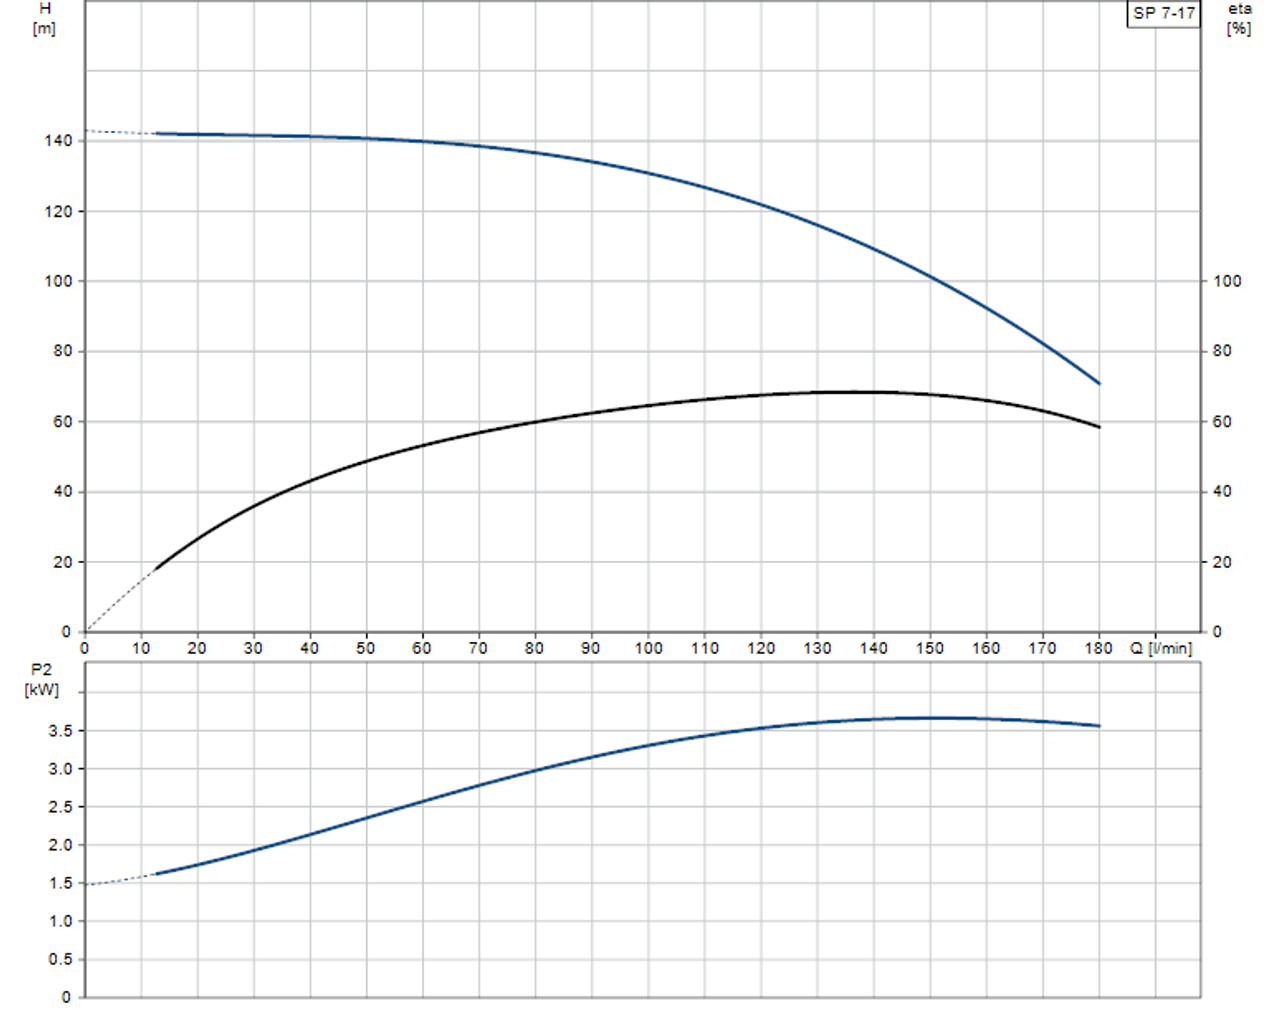 SP 7-17 Performance Curve